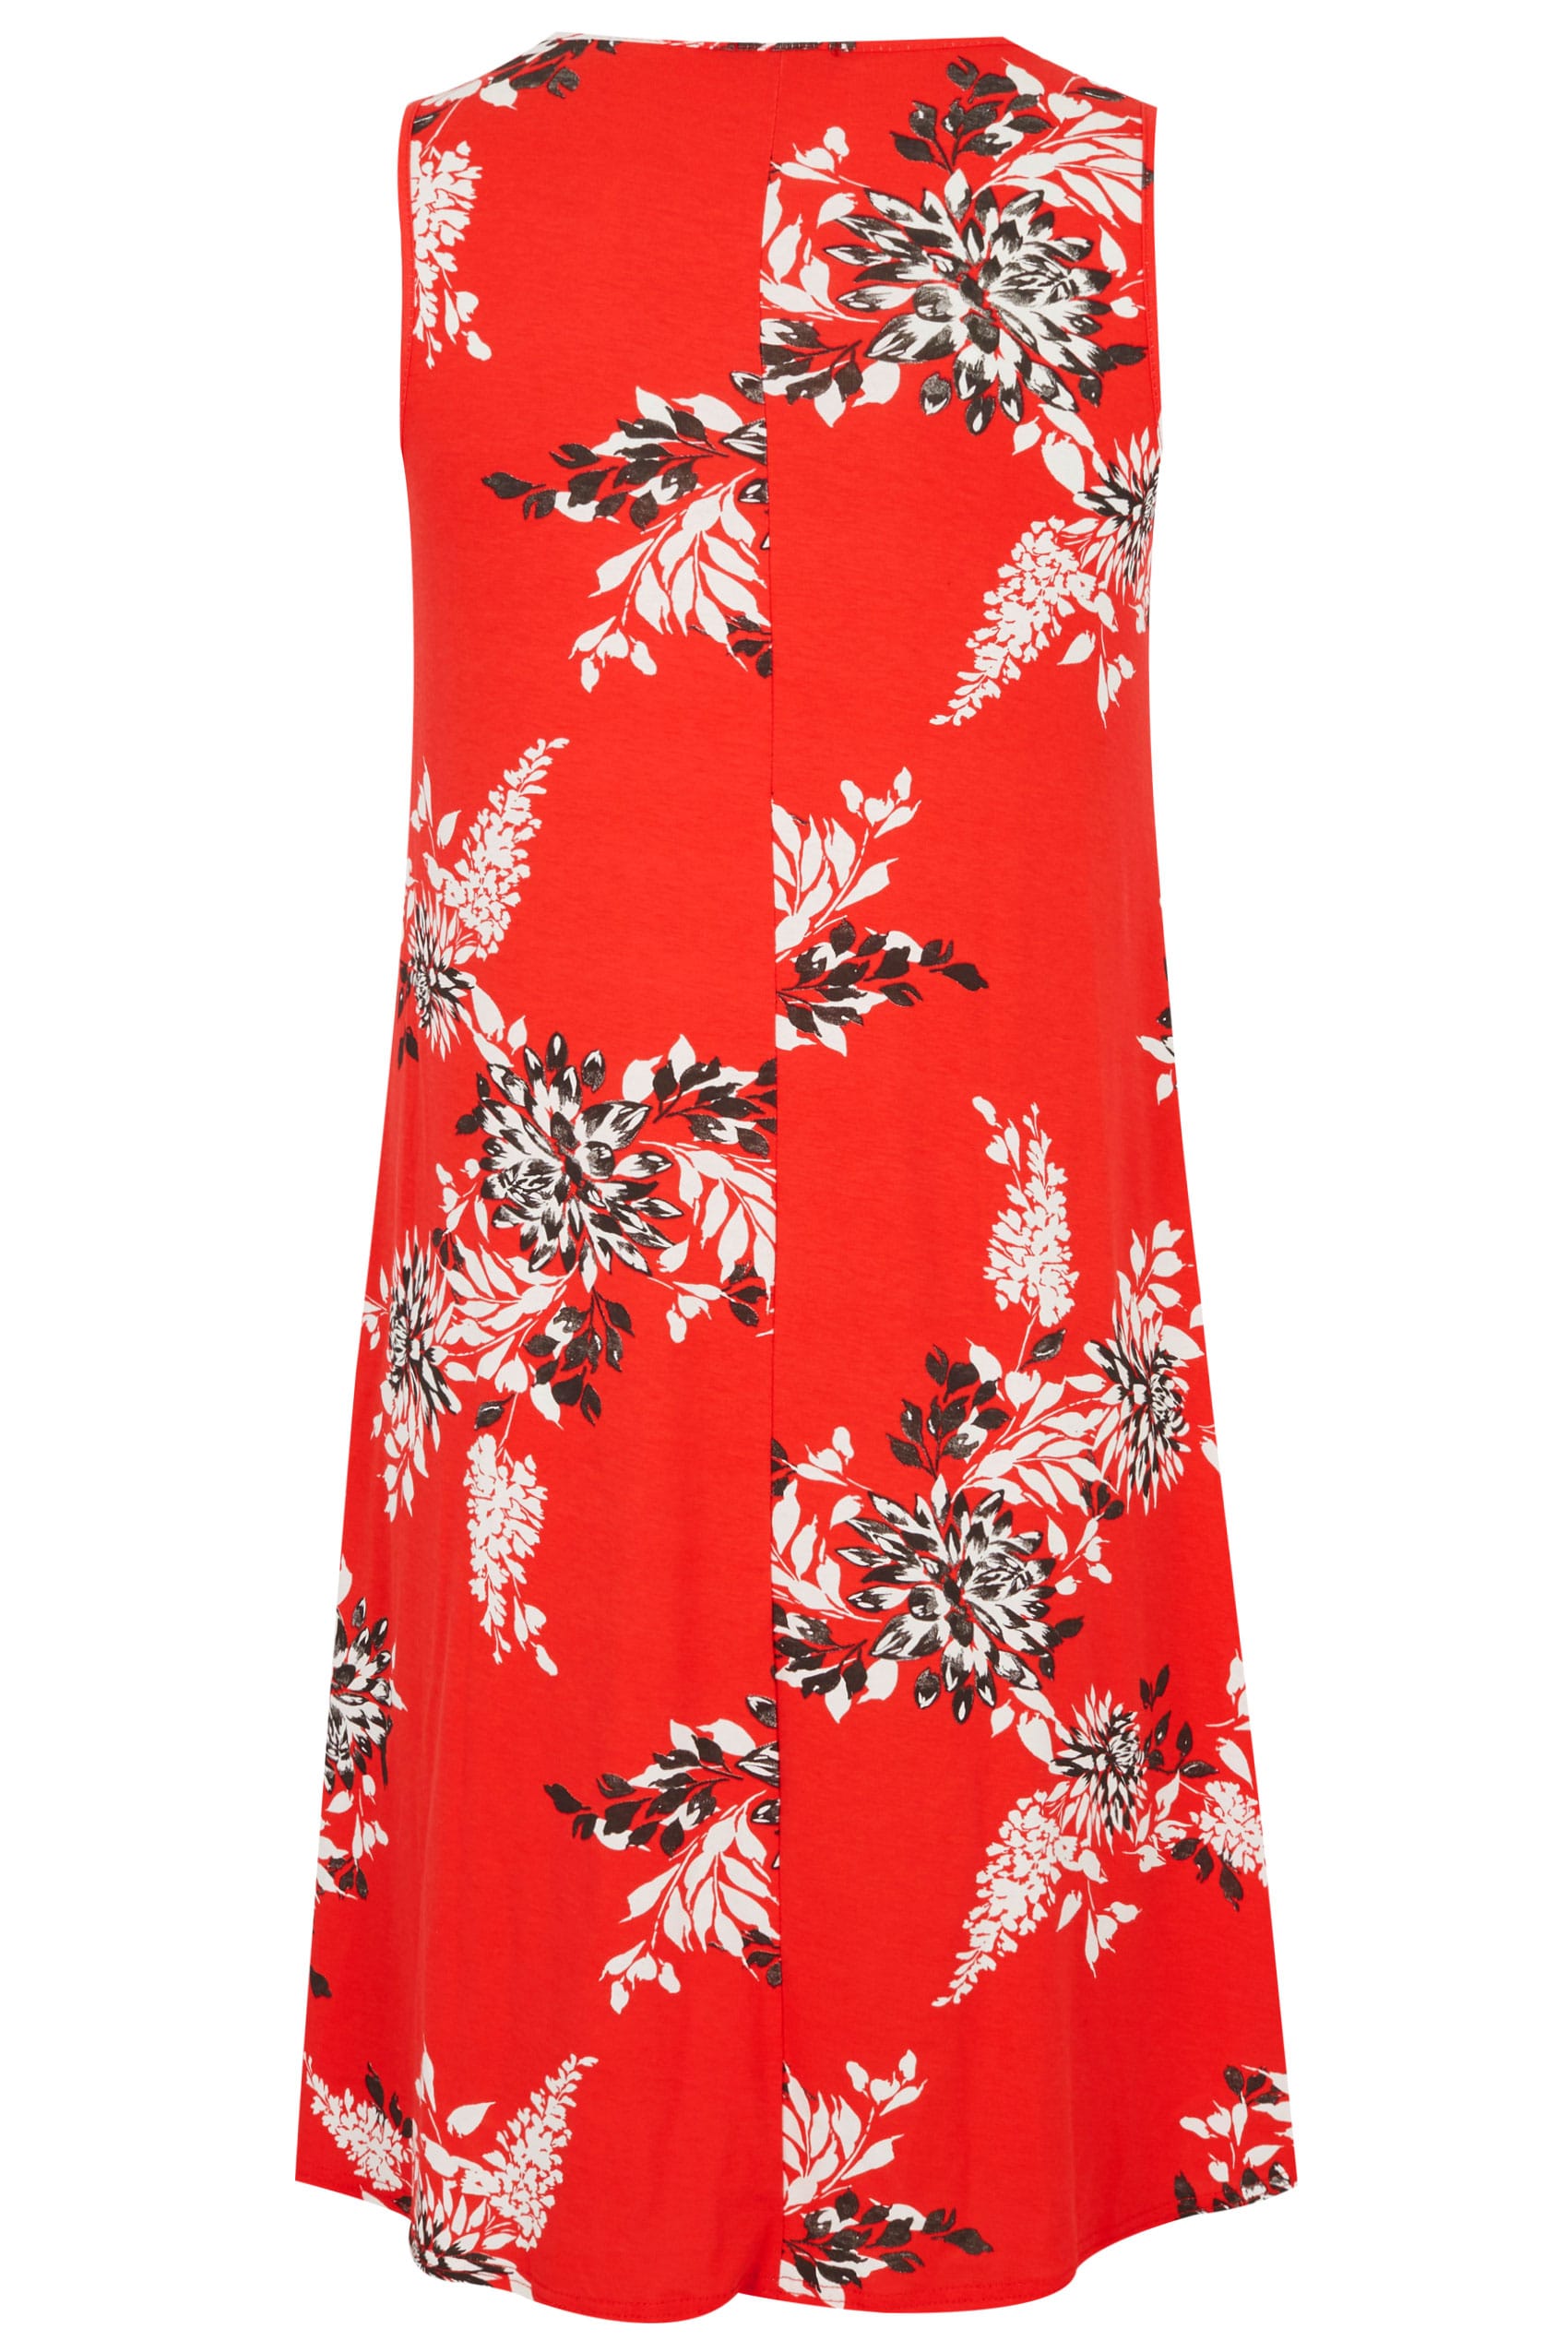 Red Floral Drape Pocket Dress, plus size 16 to 32